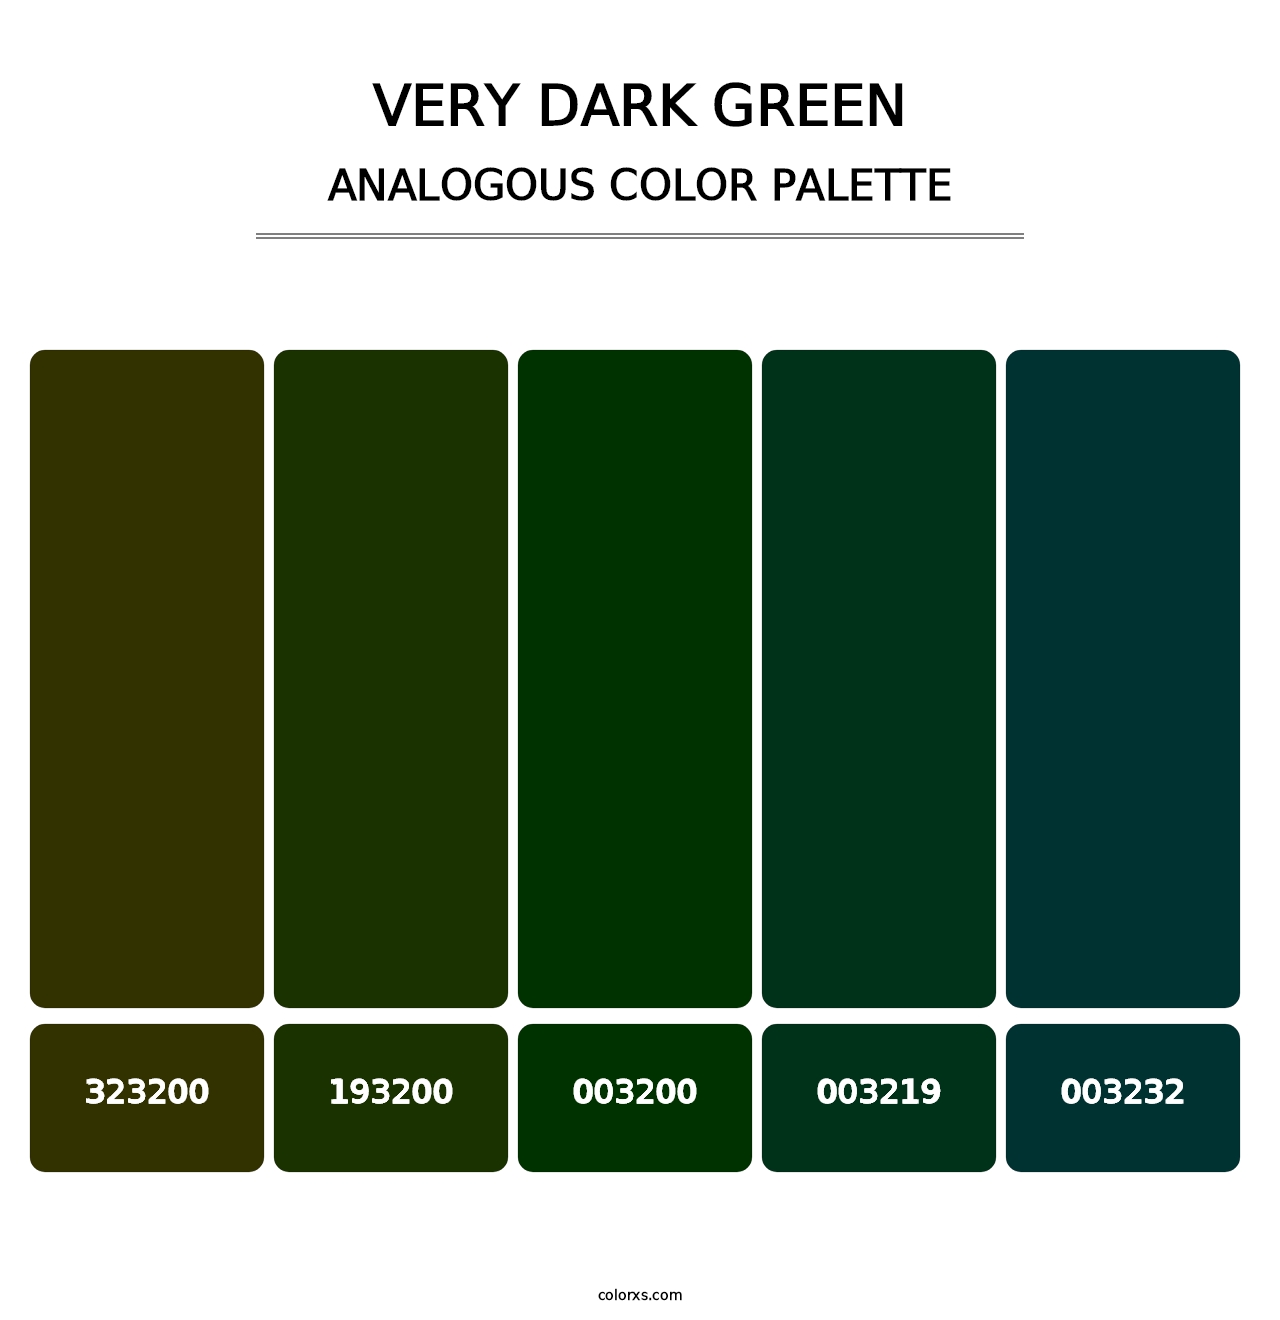 Very Dark Green - Analogous Color Palette